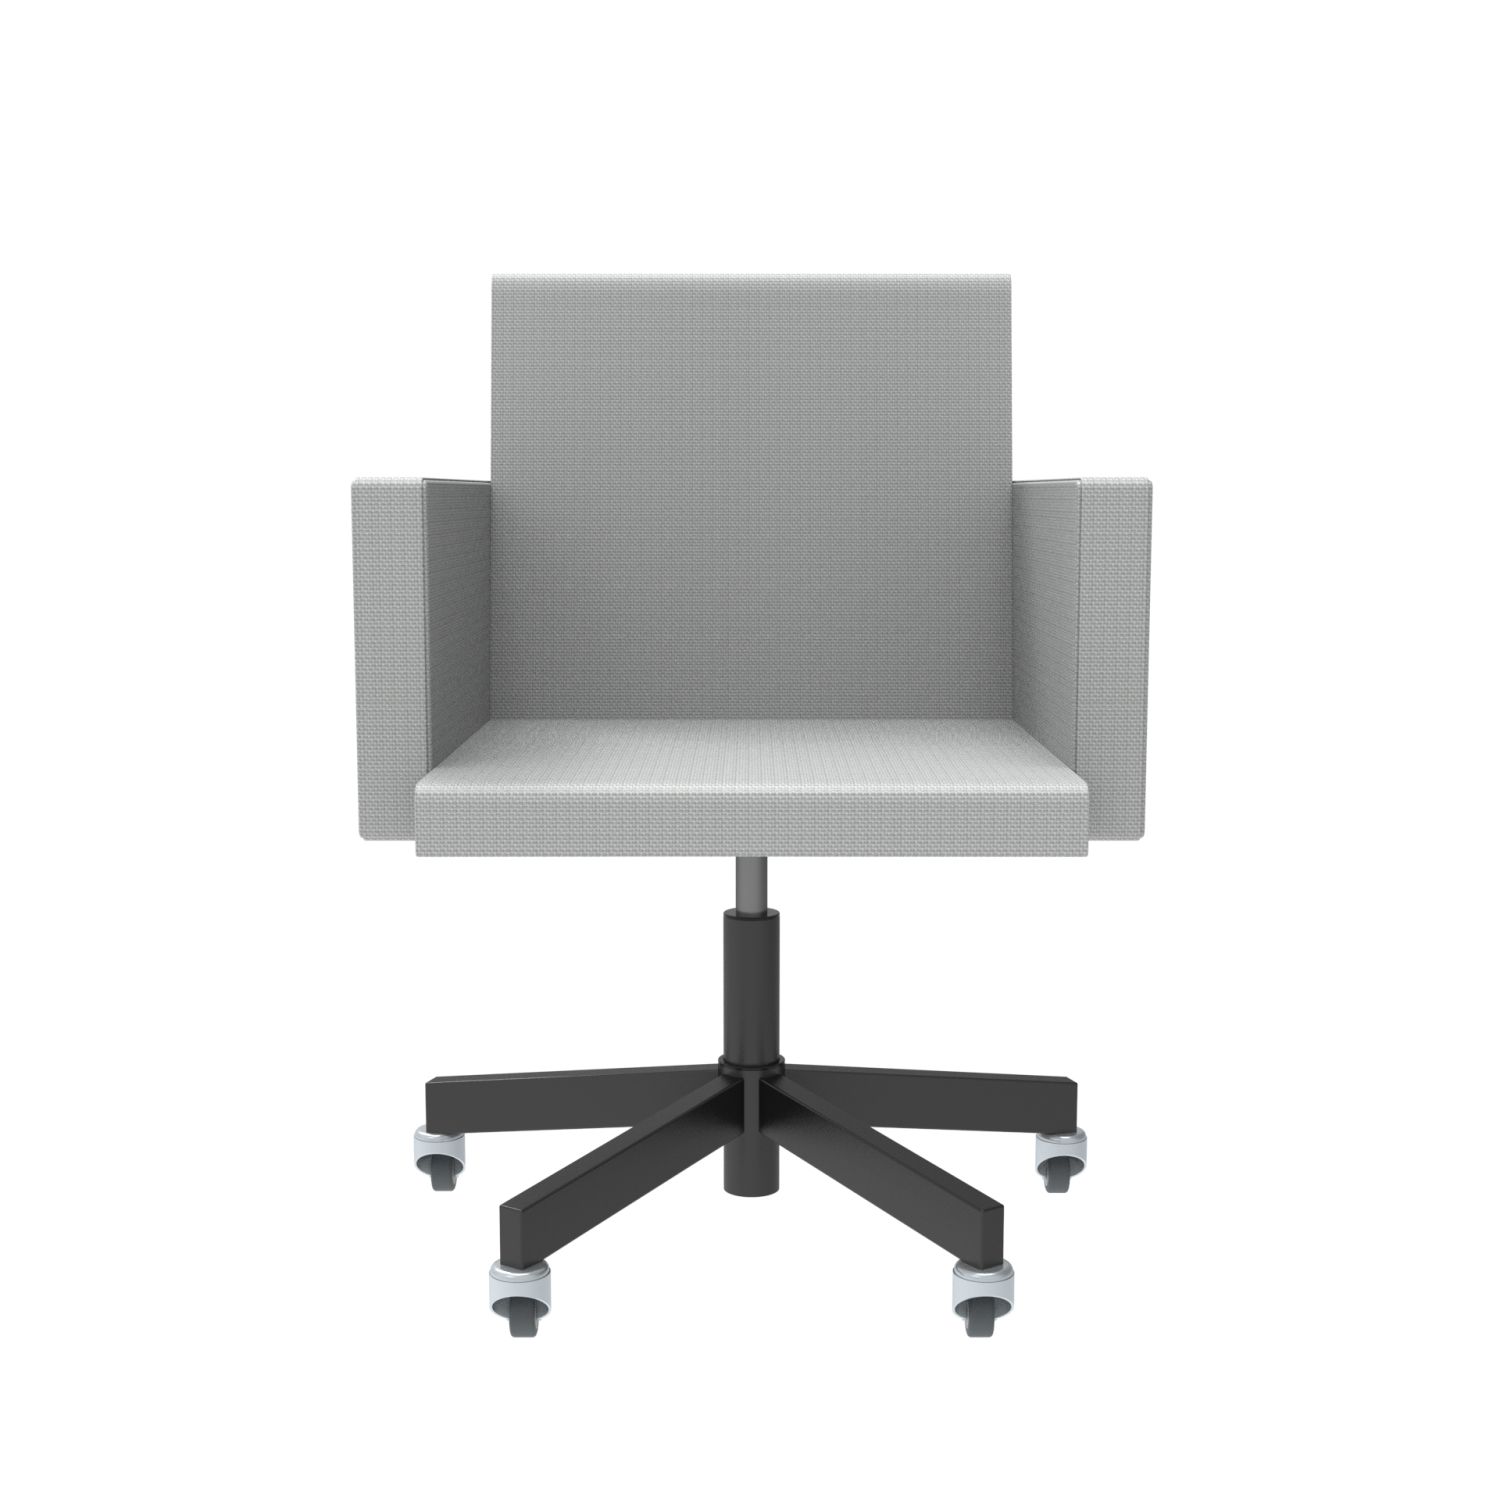 lensvelt atelier van lieshout office chair with armrests breeze light grey 171 black ral9005 soft rolls